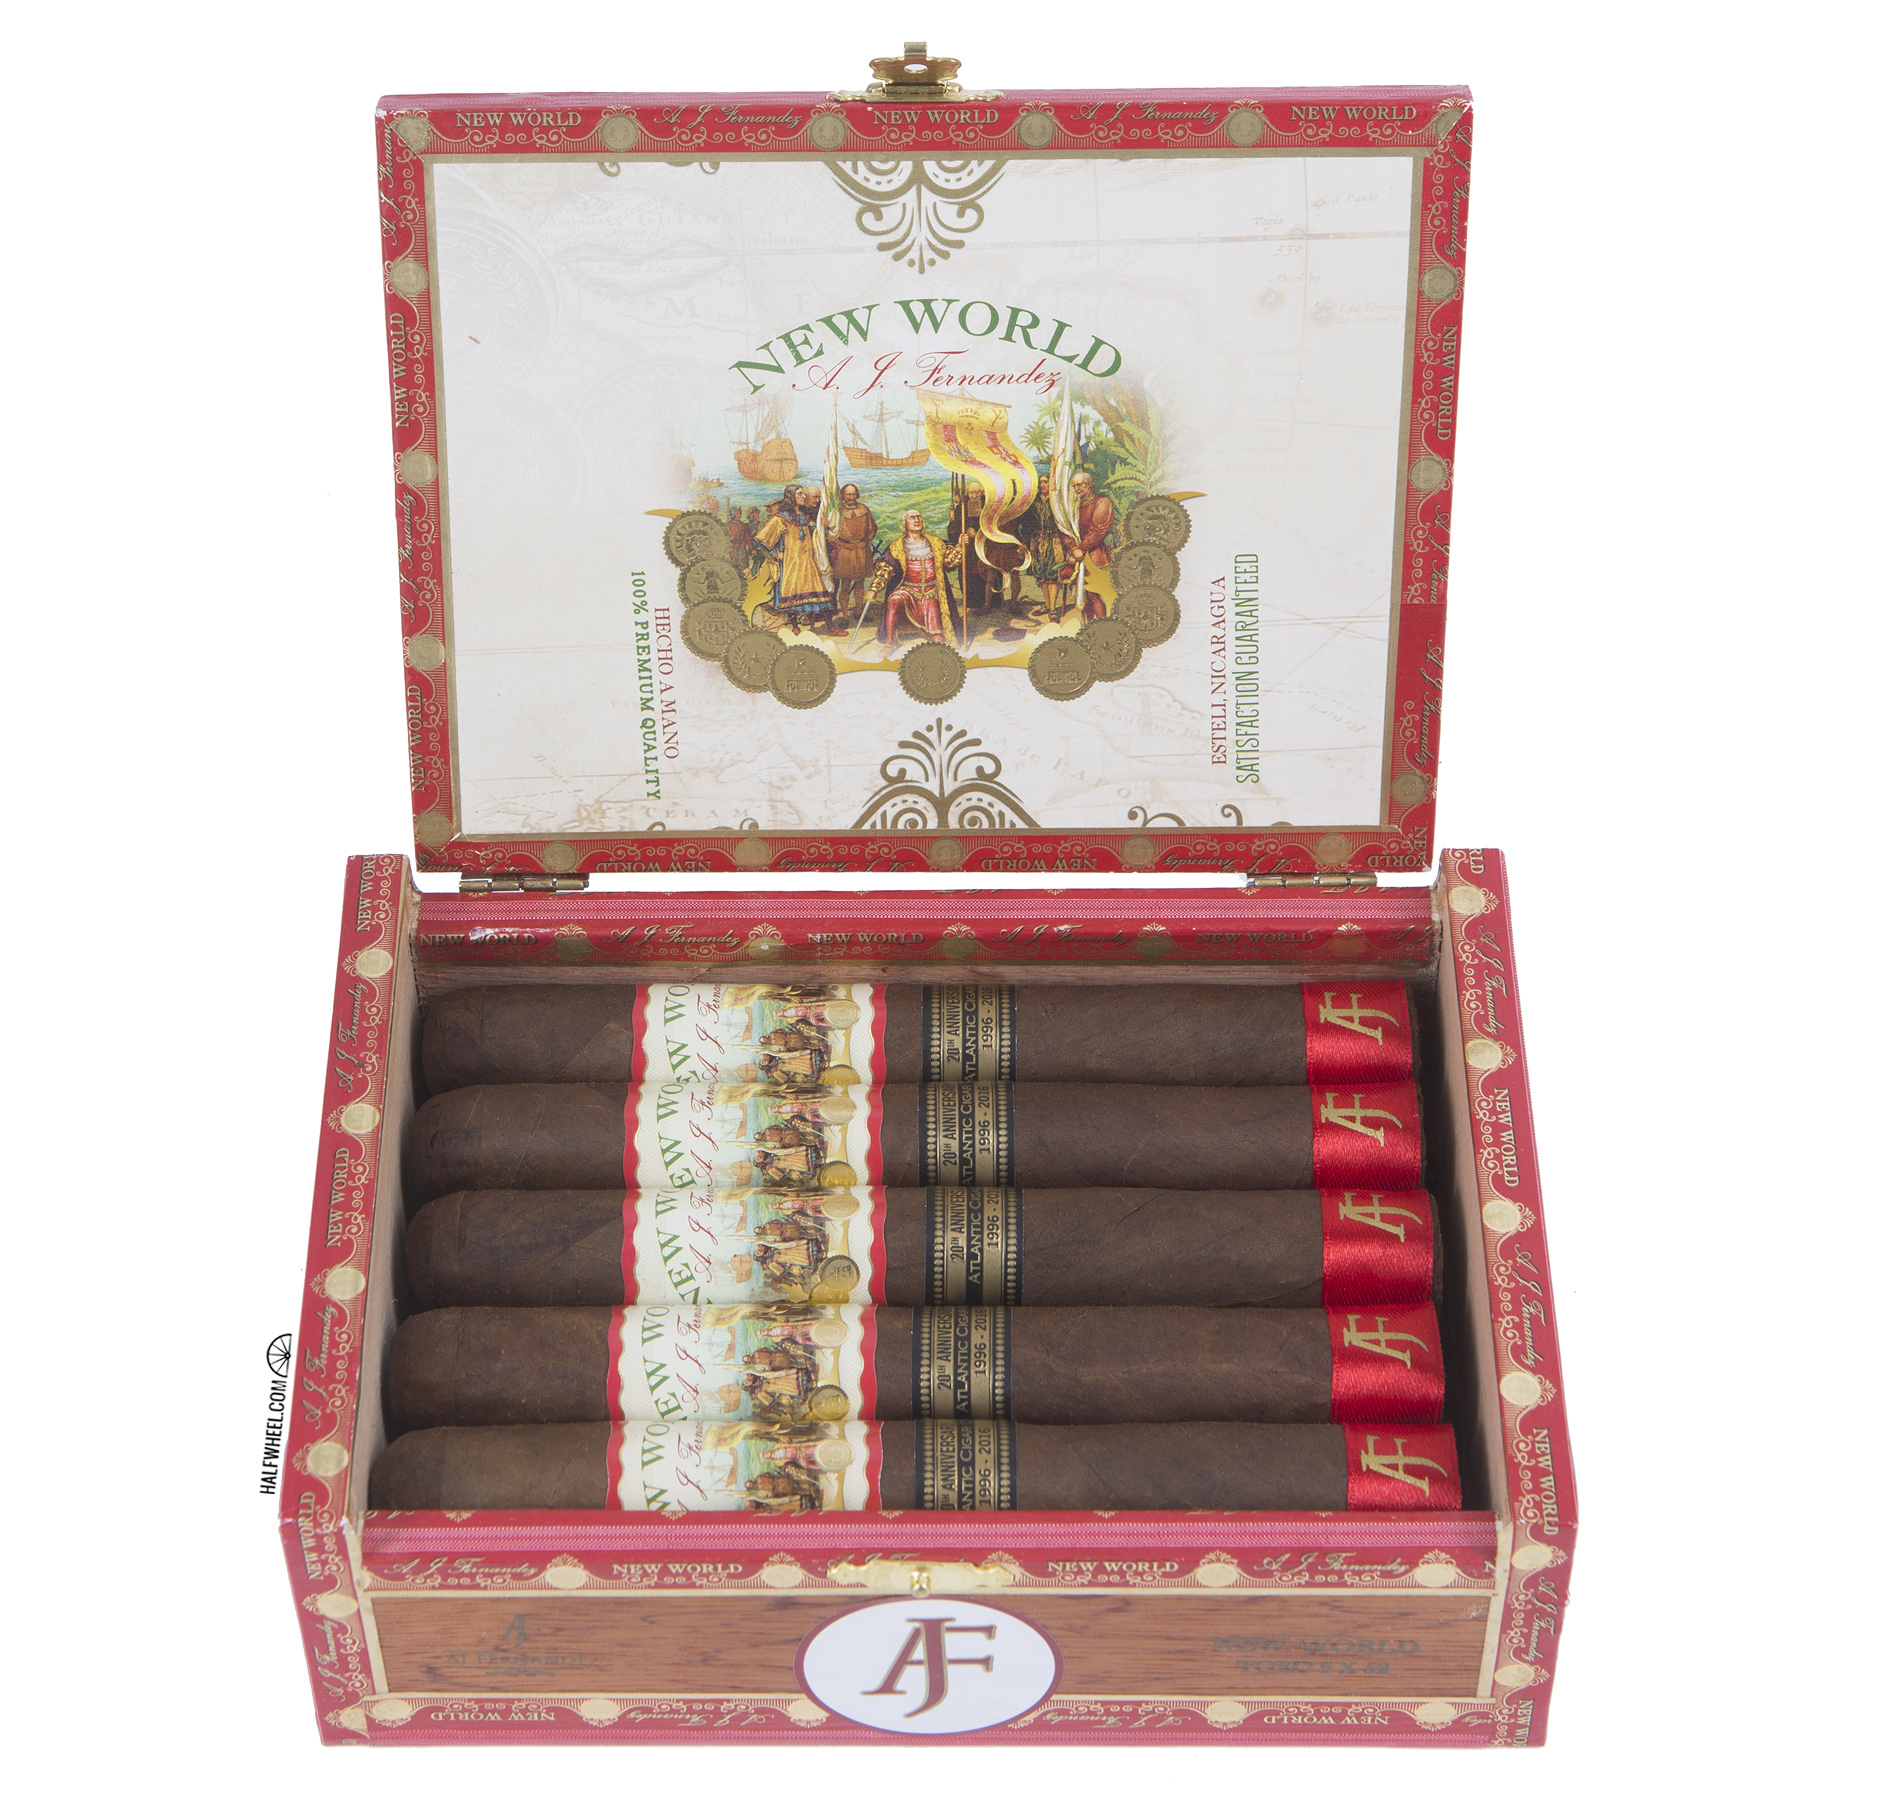 New World Atlantic Cigar 20th Aniversario Box 2